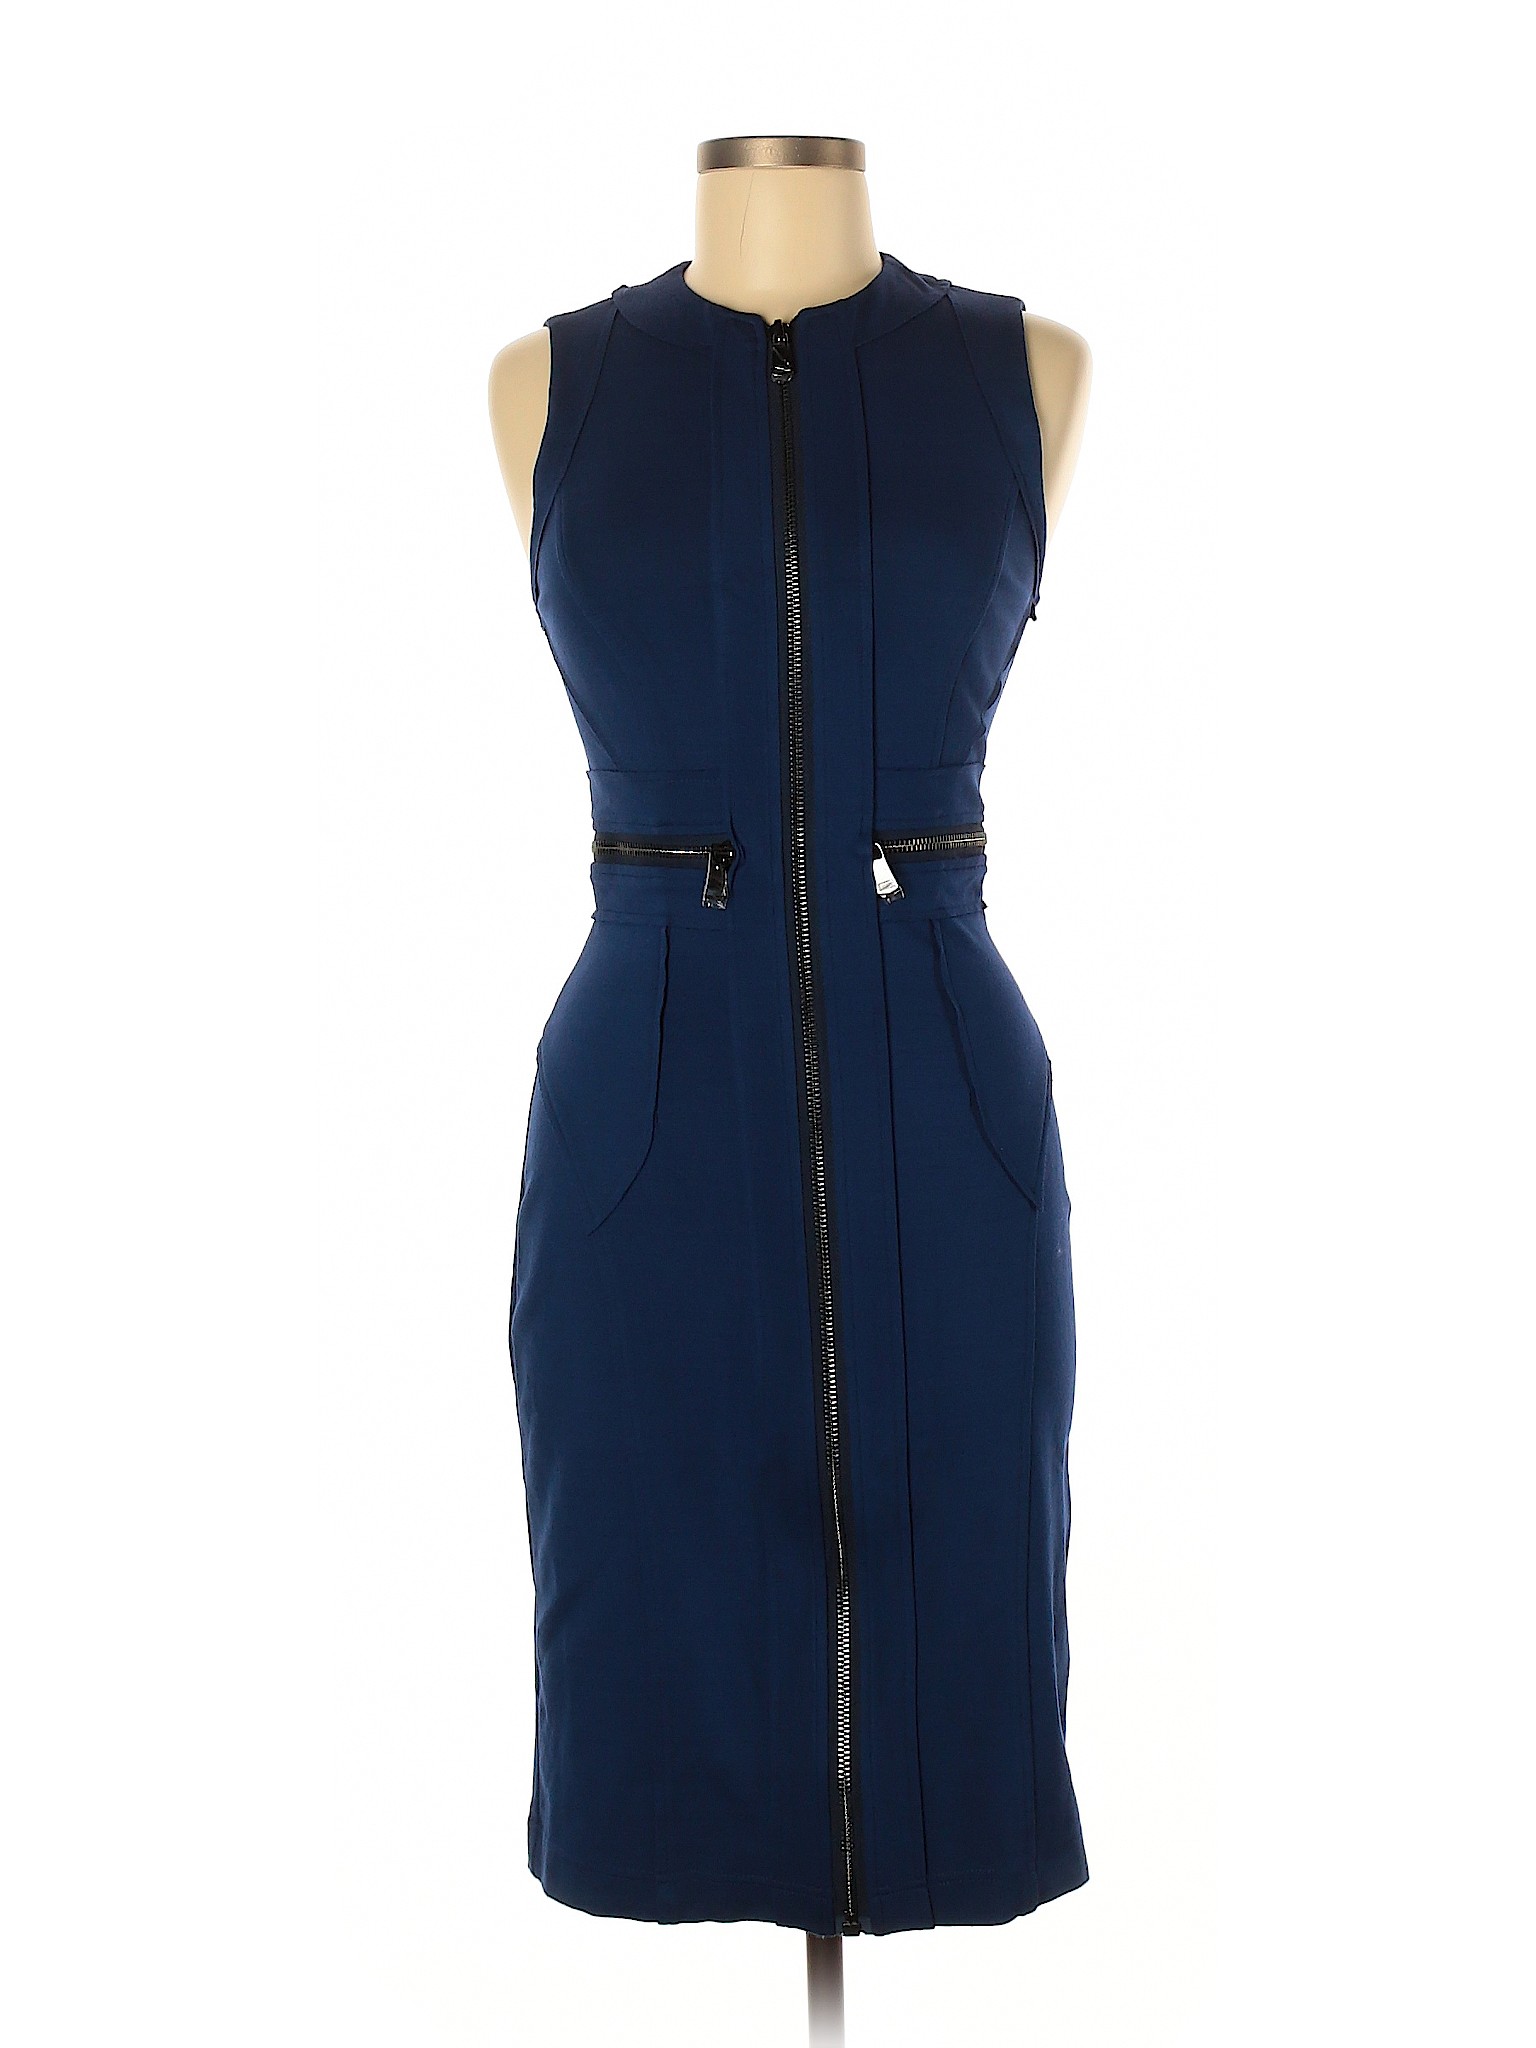 NWT Watson x Watson Women Blue Casual Dress 8 | eBay